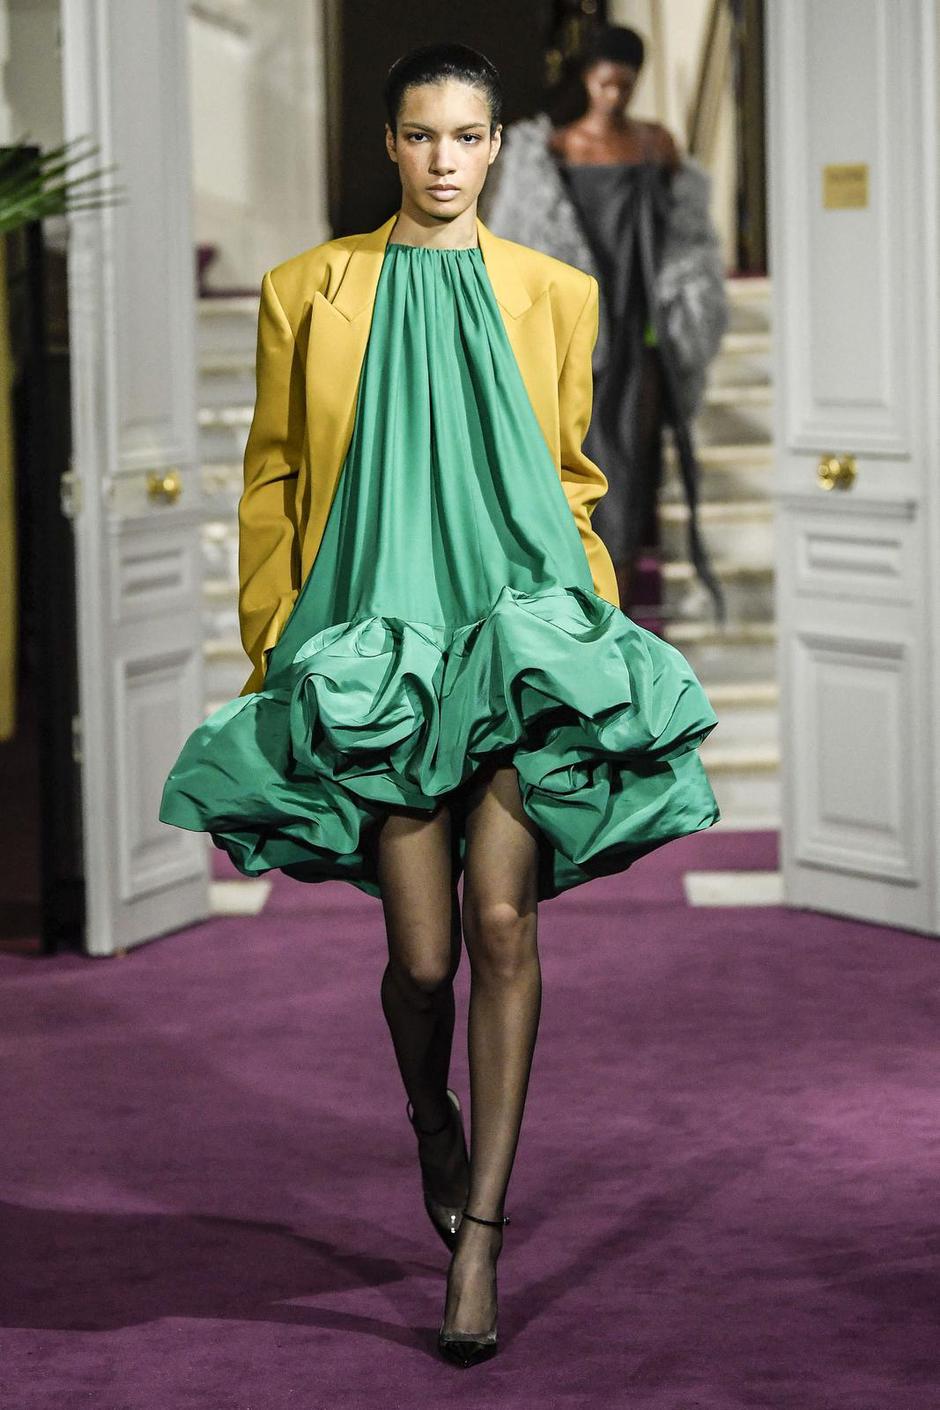 Tjedan visoke mode u Parizu | Autor: Pixsell/Bestimage